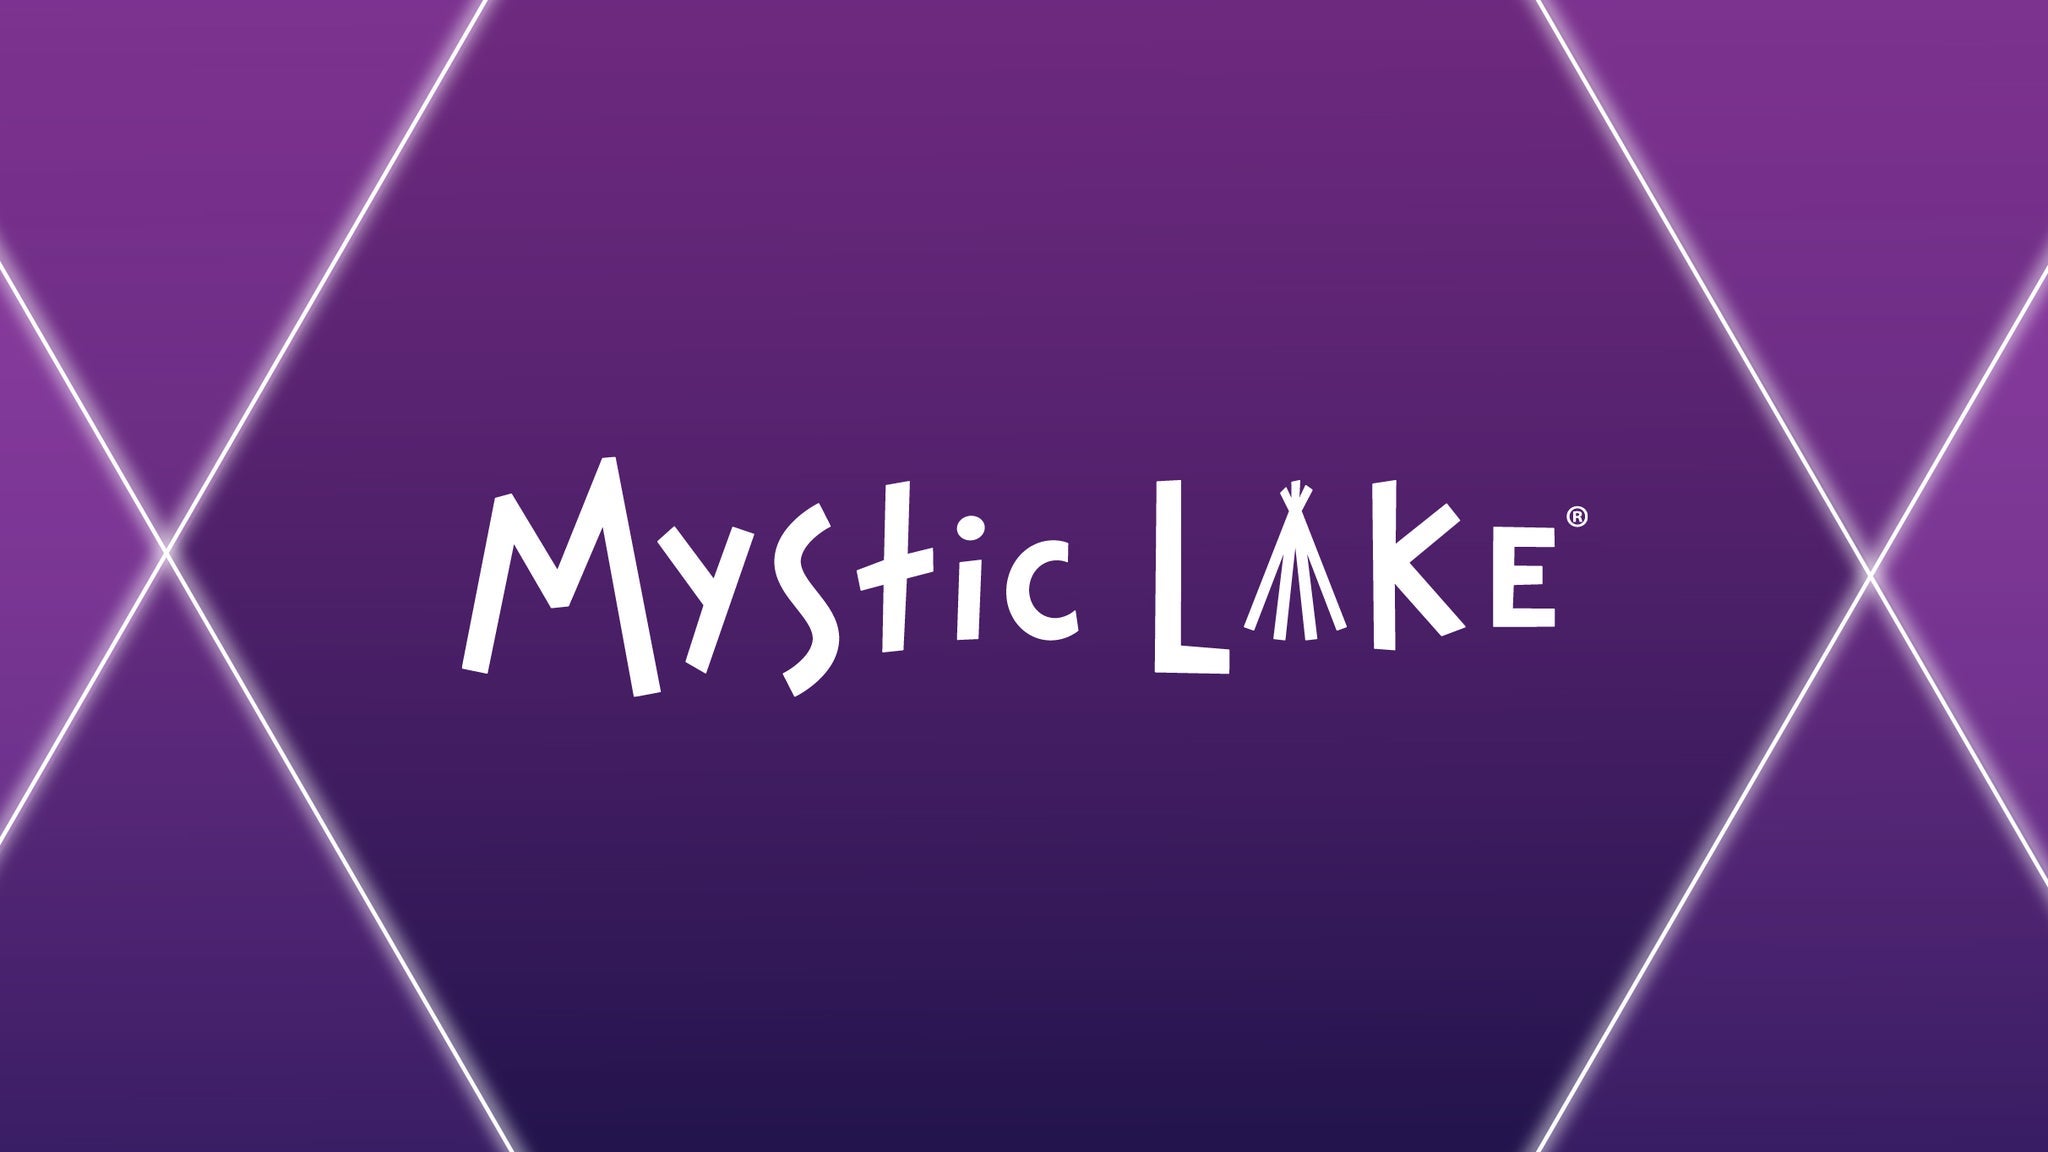 Mystic Lake Event presale information on freepresalepasswords.com